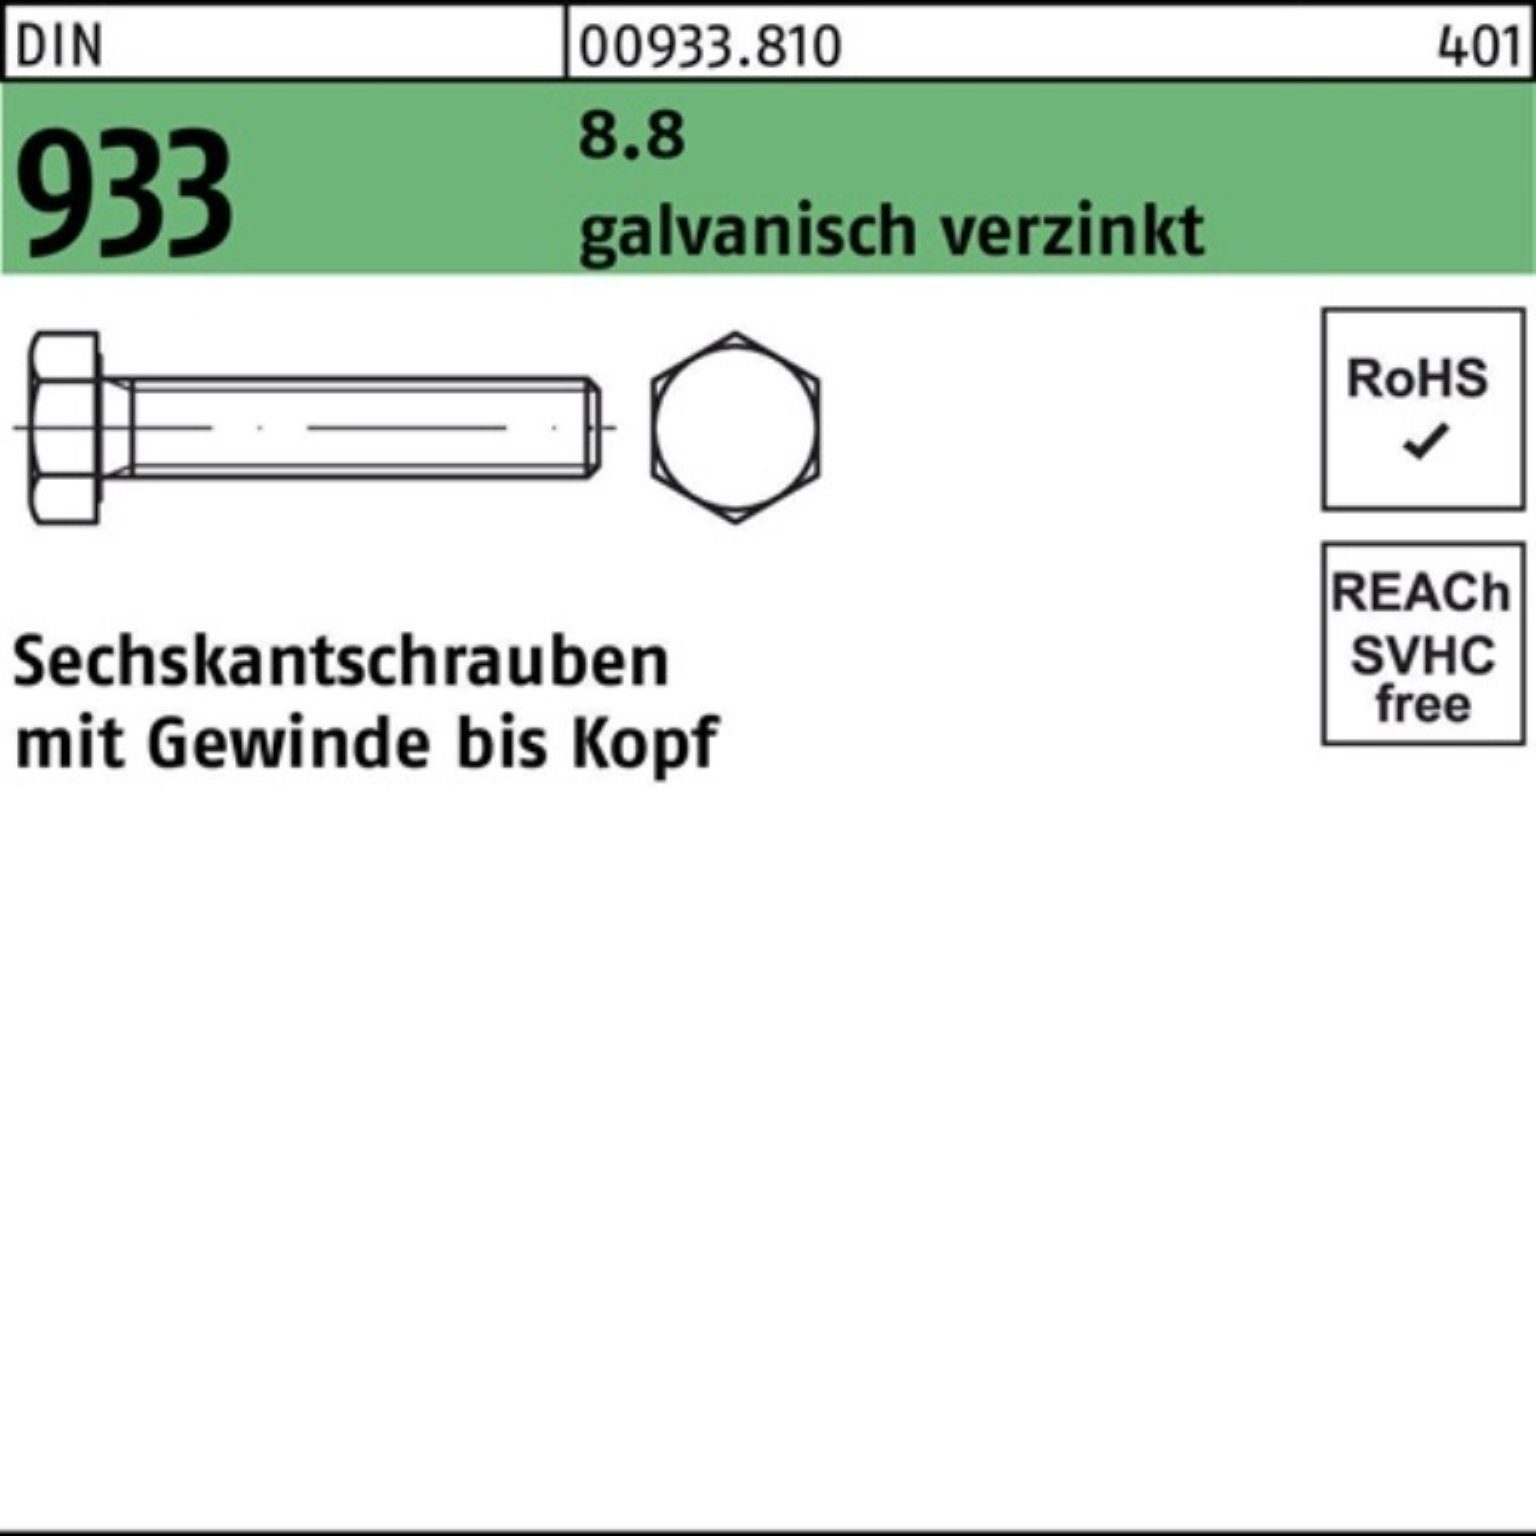 Sechskantschraube Reyher VG Pack DIN 8.8 Sechskantschraube 100er 933 galv.verz. Stüc 8 100 M3x